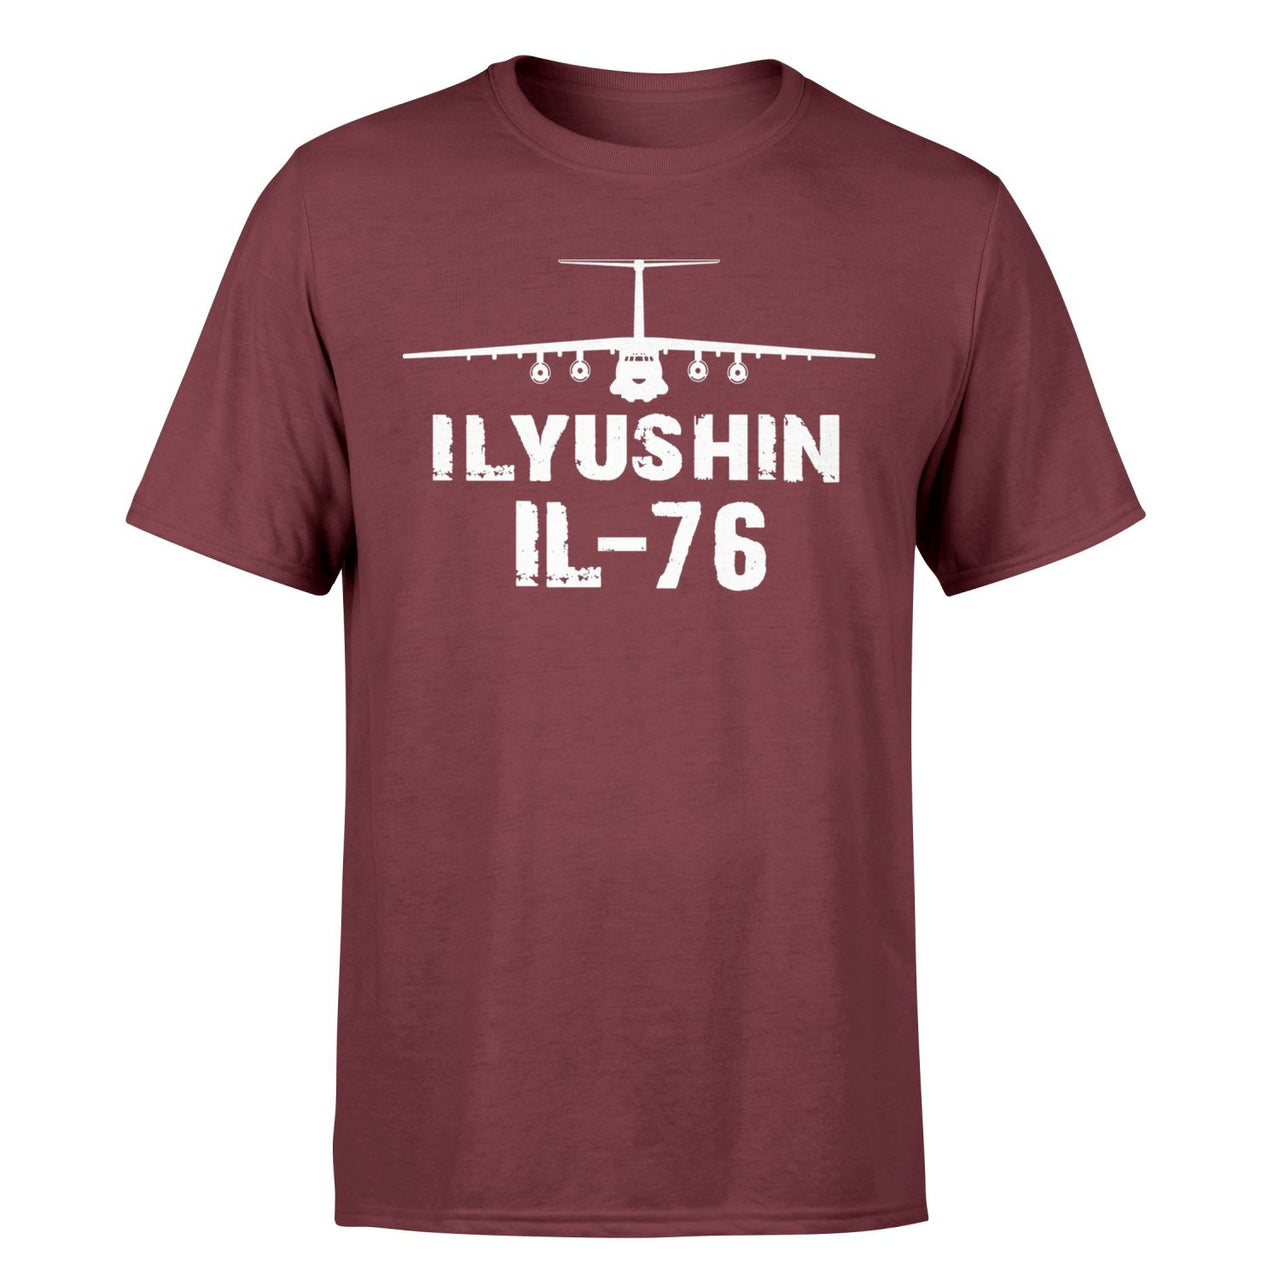 ILyushin IL-76 & Plane Designed T-Shirts